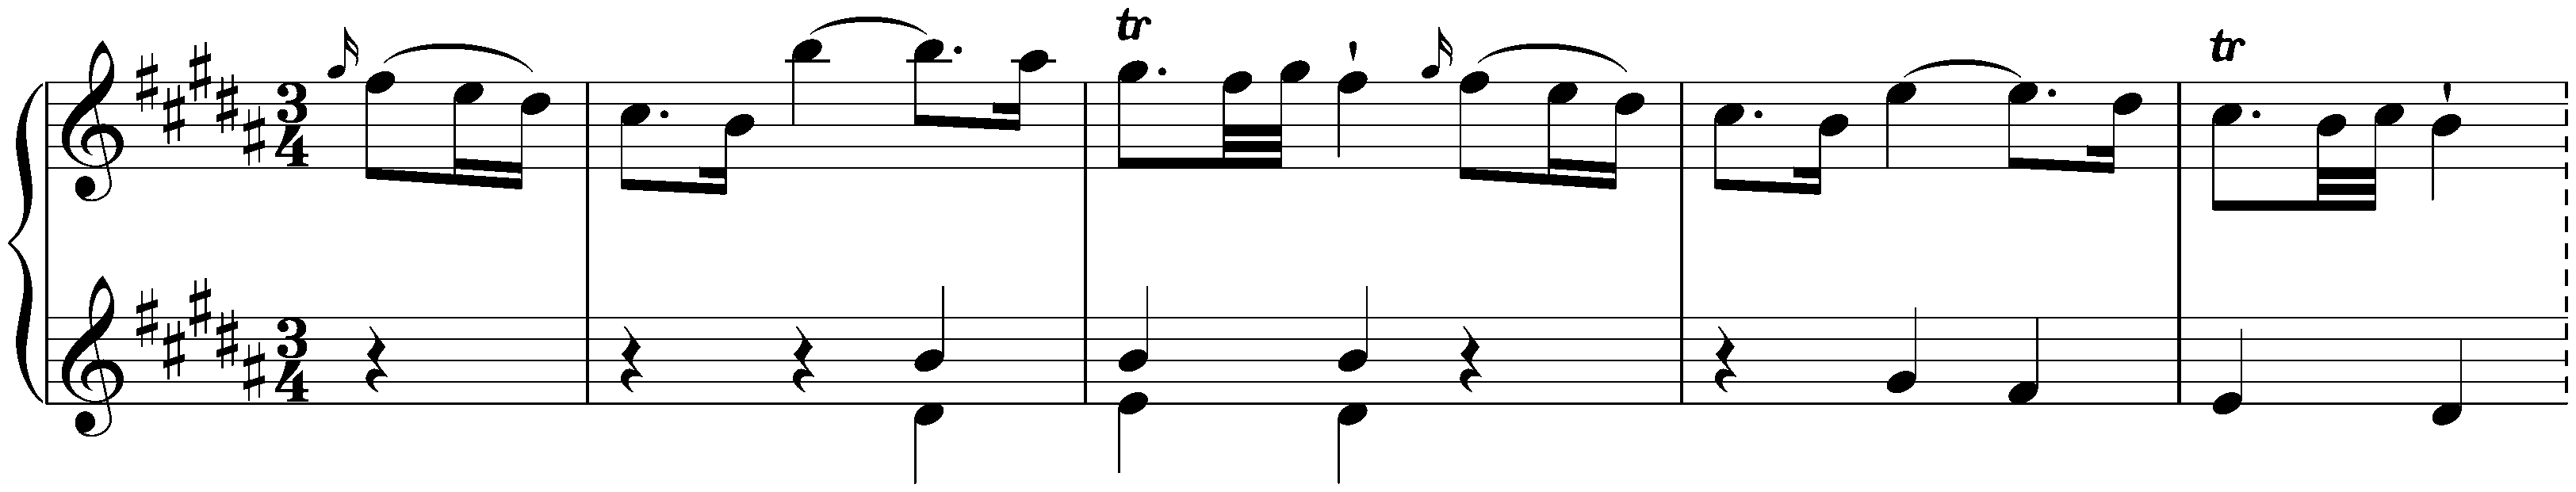 Sonata in B minor, Hob. XVI:32; 2. Menuet – Trio